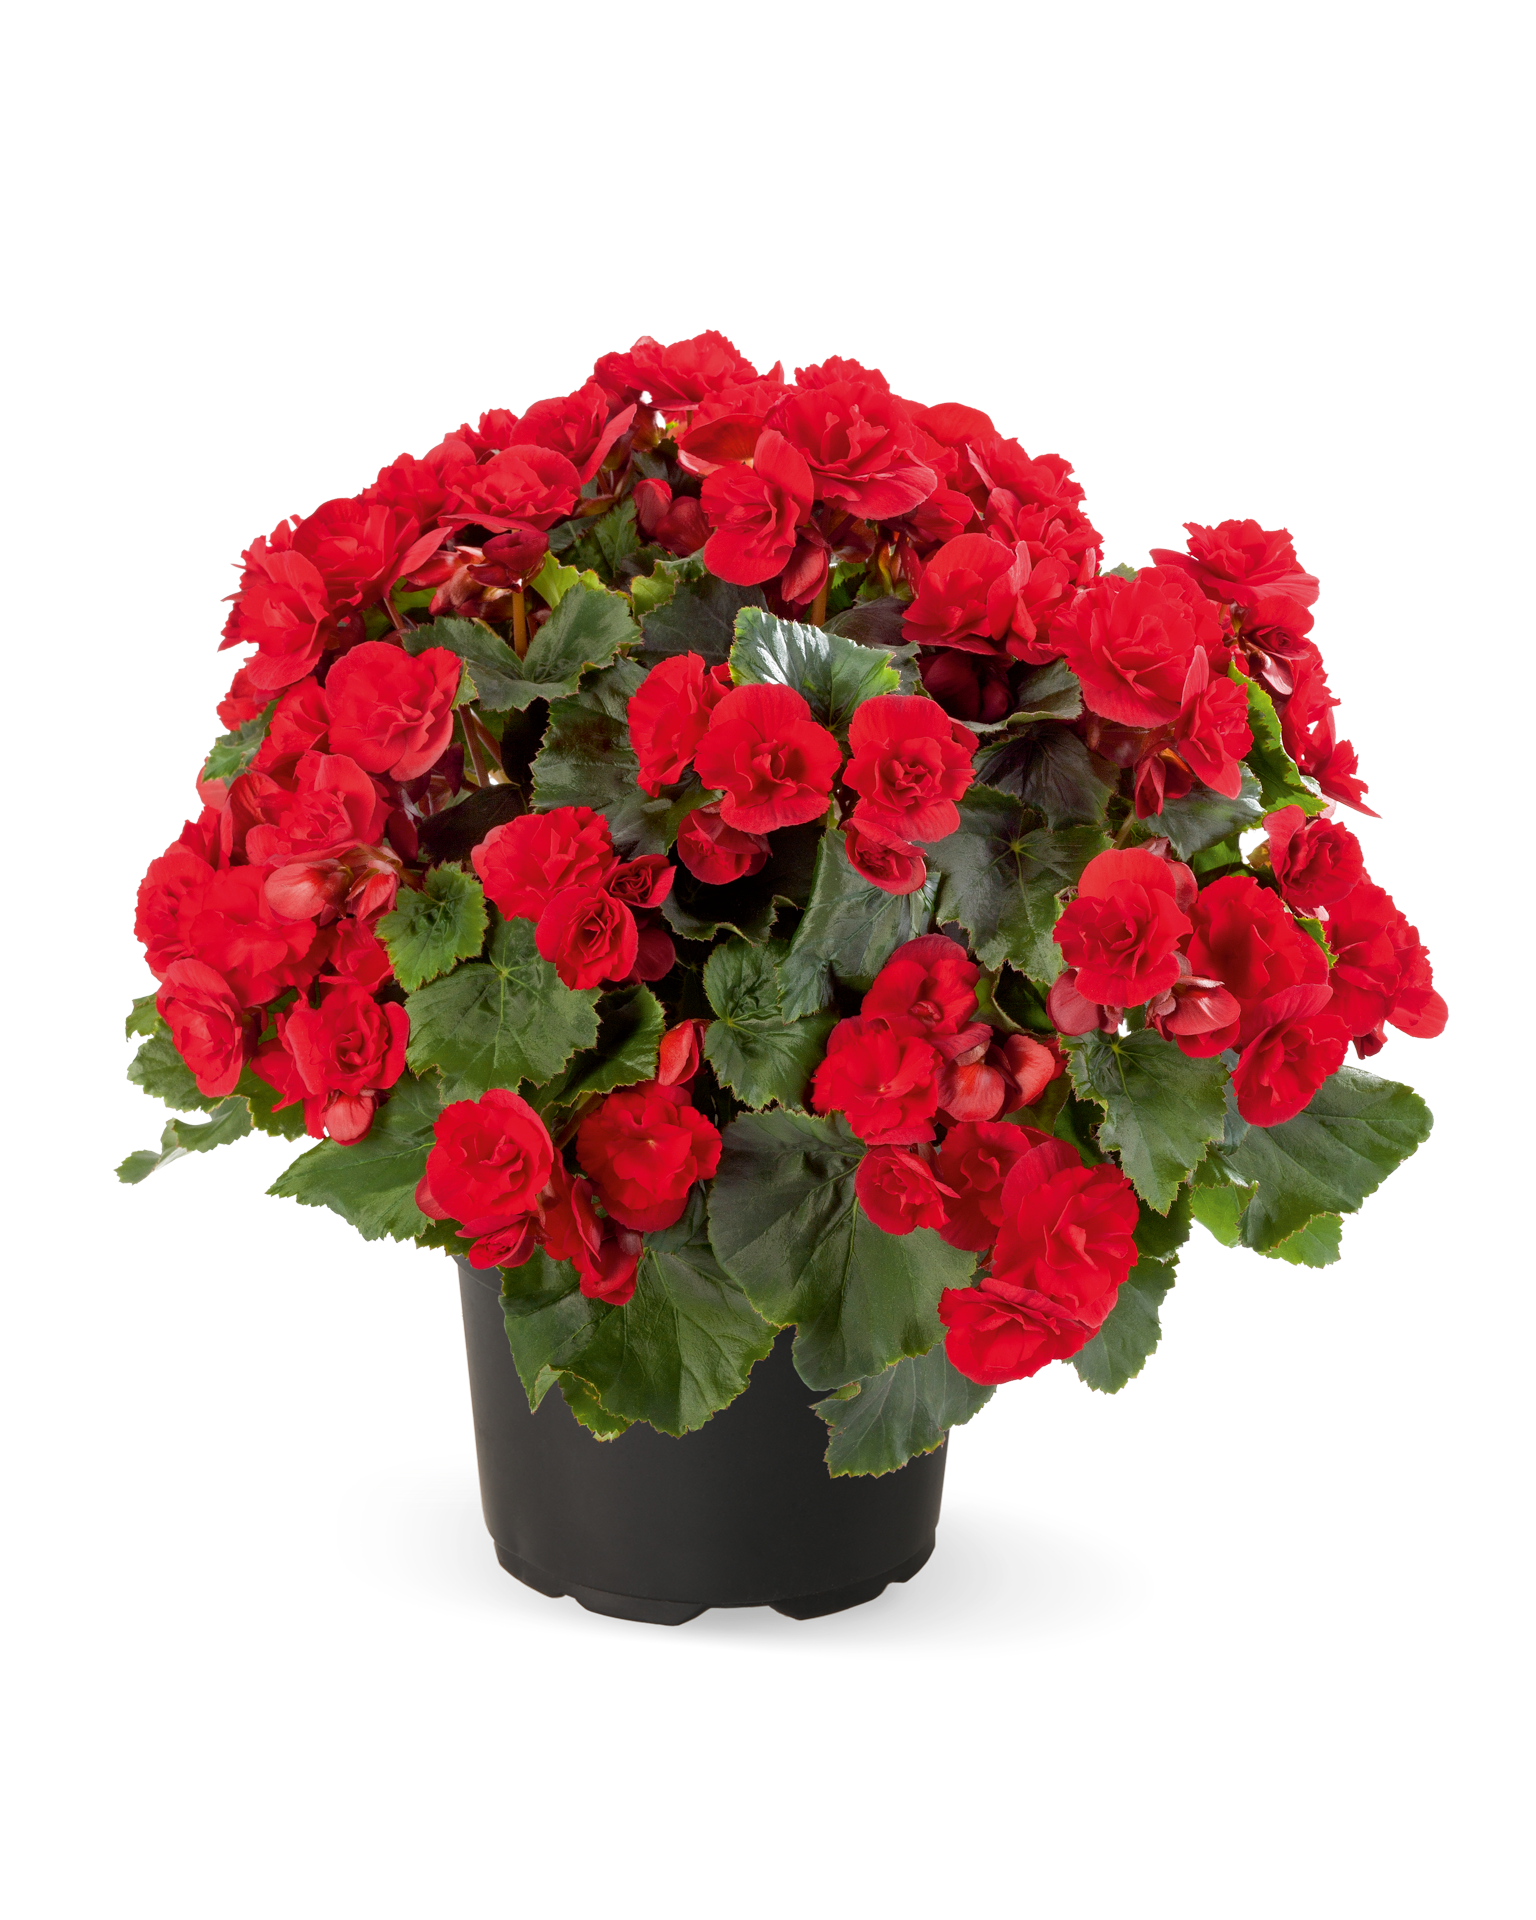 
                        Begonia
             
                        elatior
             
                        Solenia®
             
                        Scarlet
            